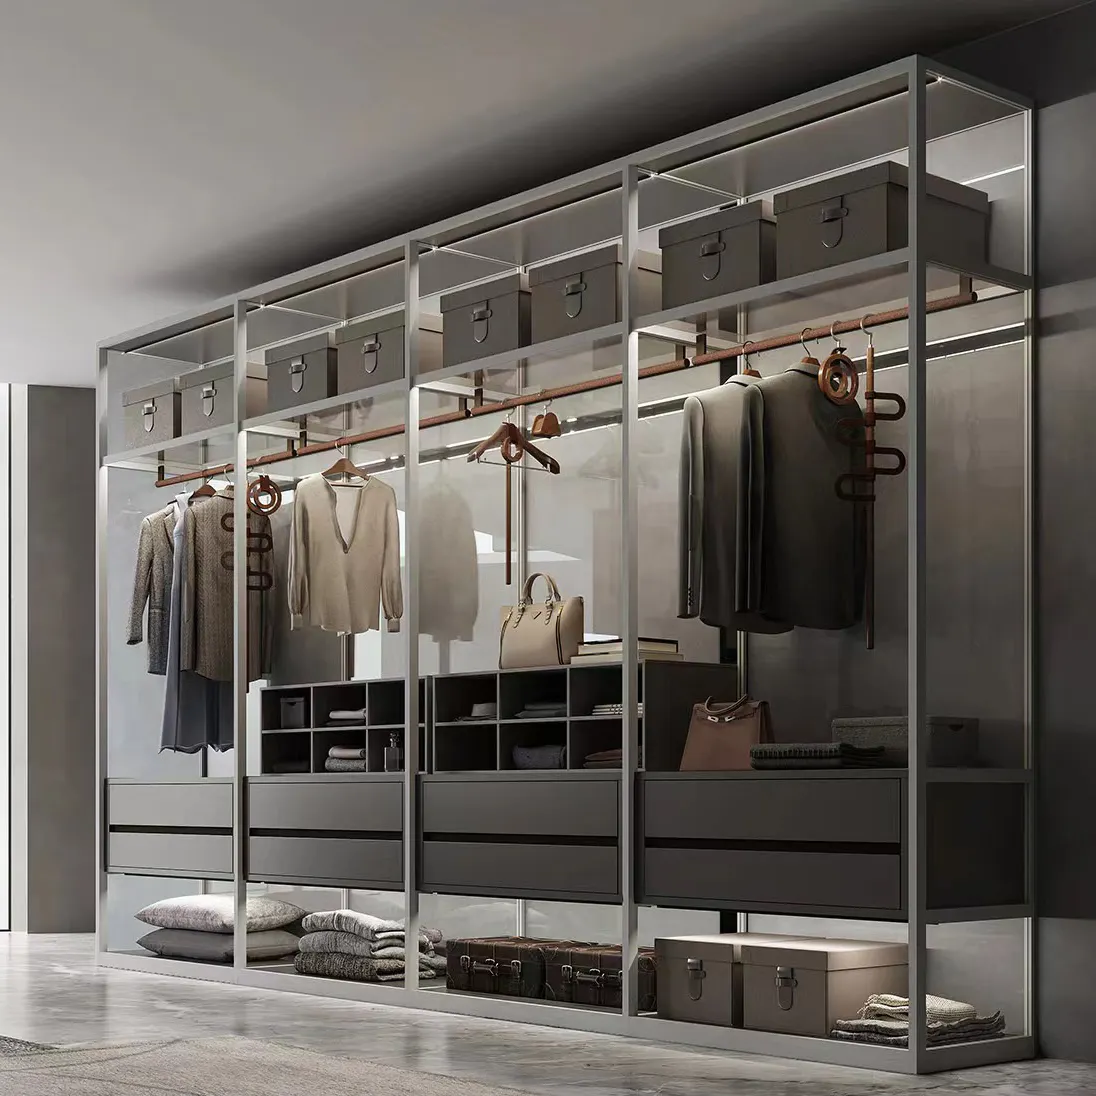 Boloni Custom Closet Cabinets Wardrobe Walk In Wardrobe System 7 Door Closet Luxury Closet Design